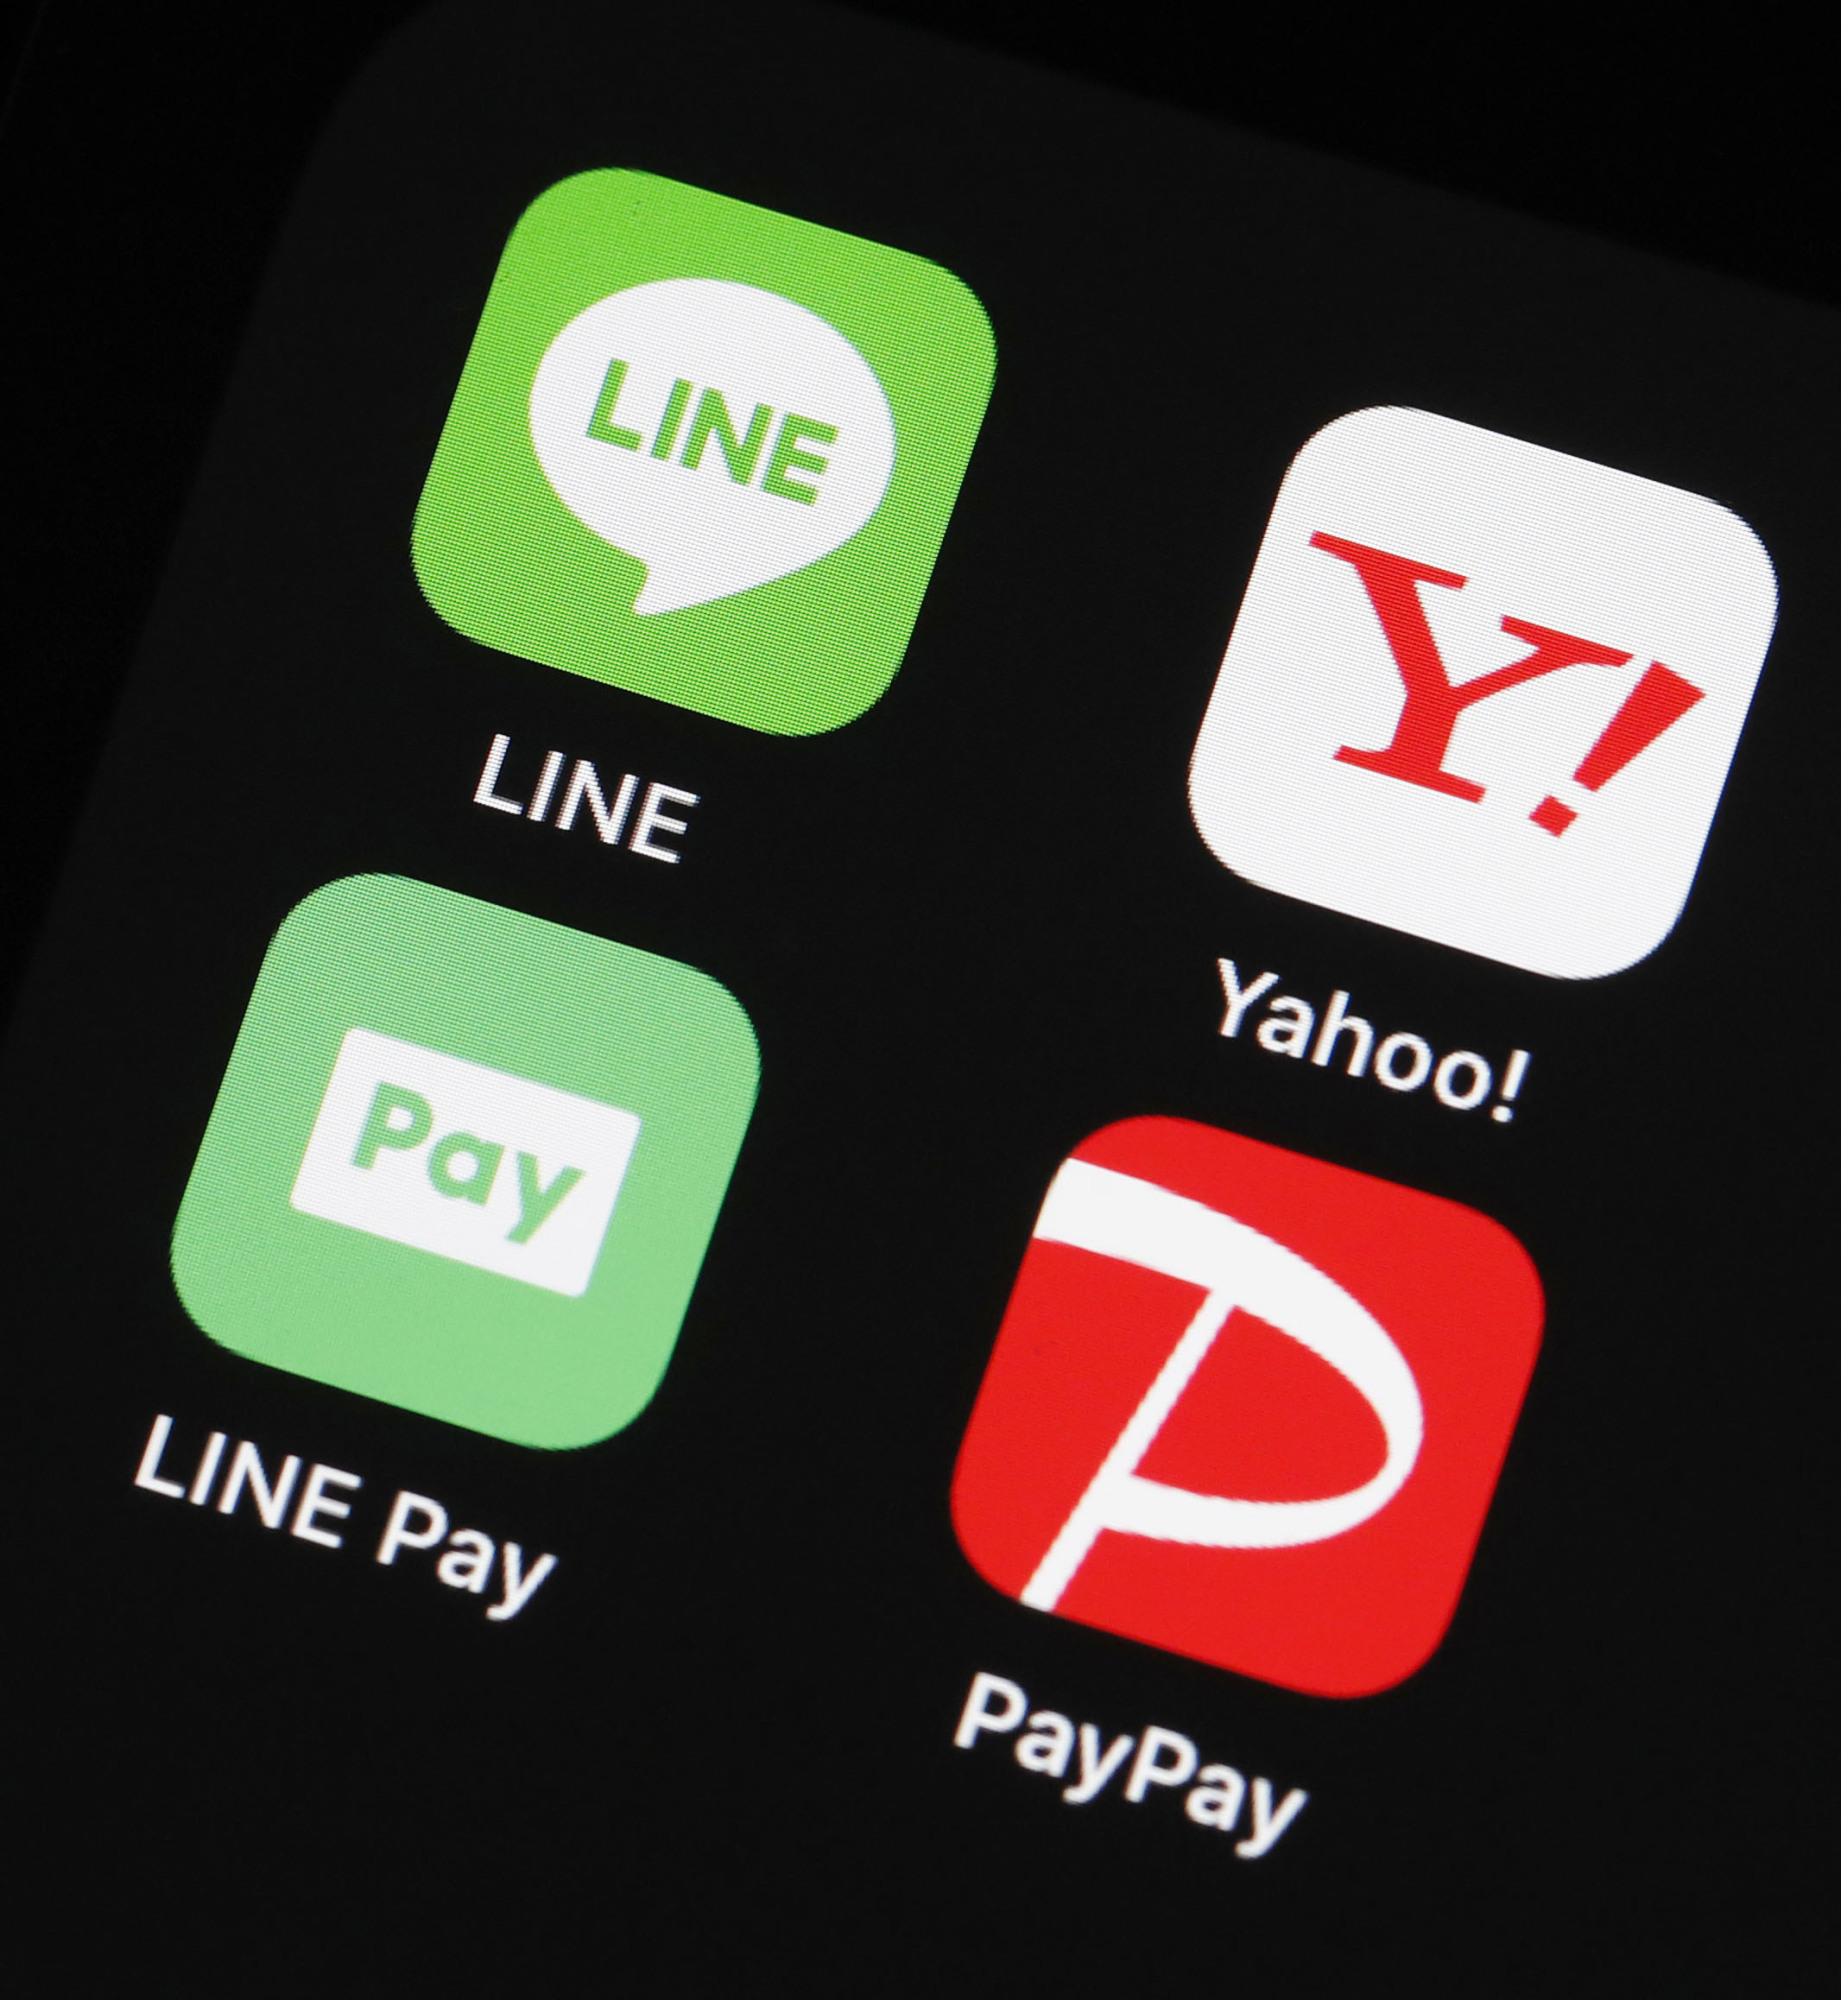 Line starts bank transfer service via smartphone payment platform - The  Japan Times